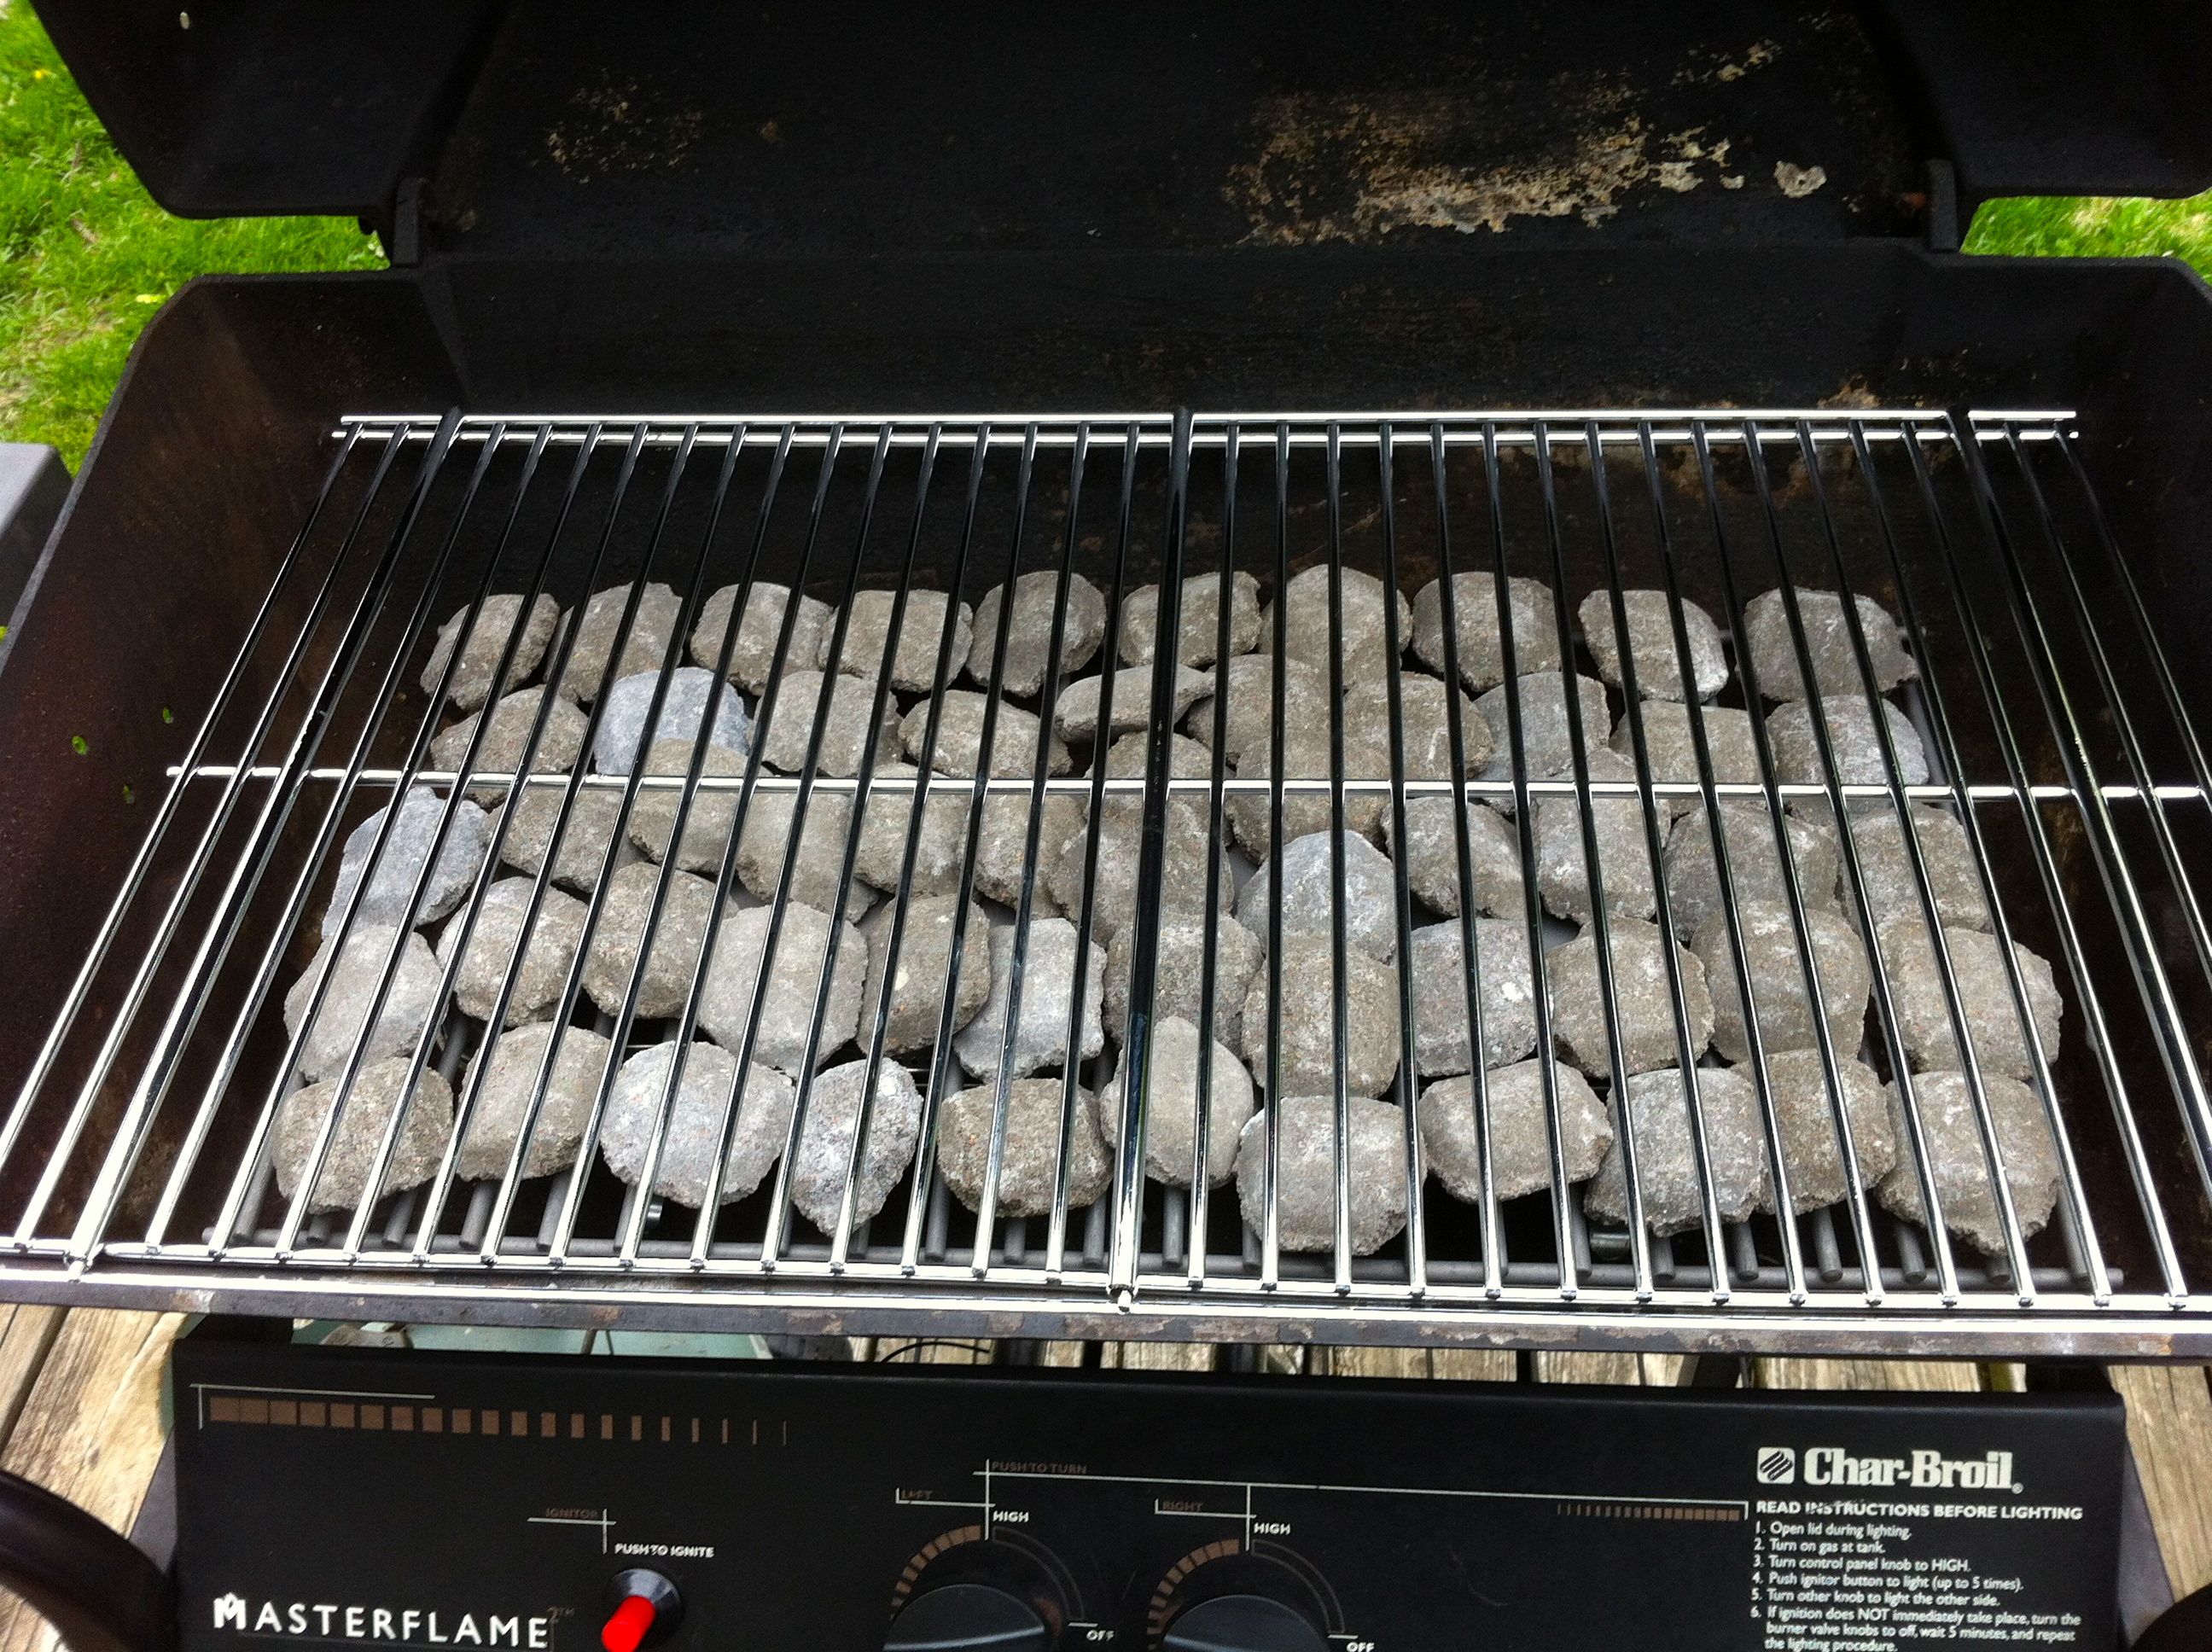 rebuilding the grill (again)